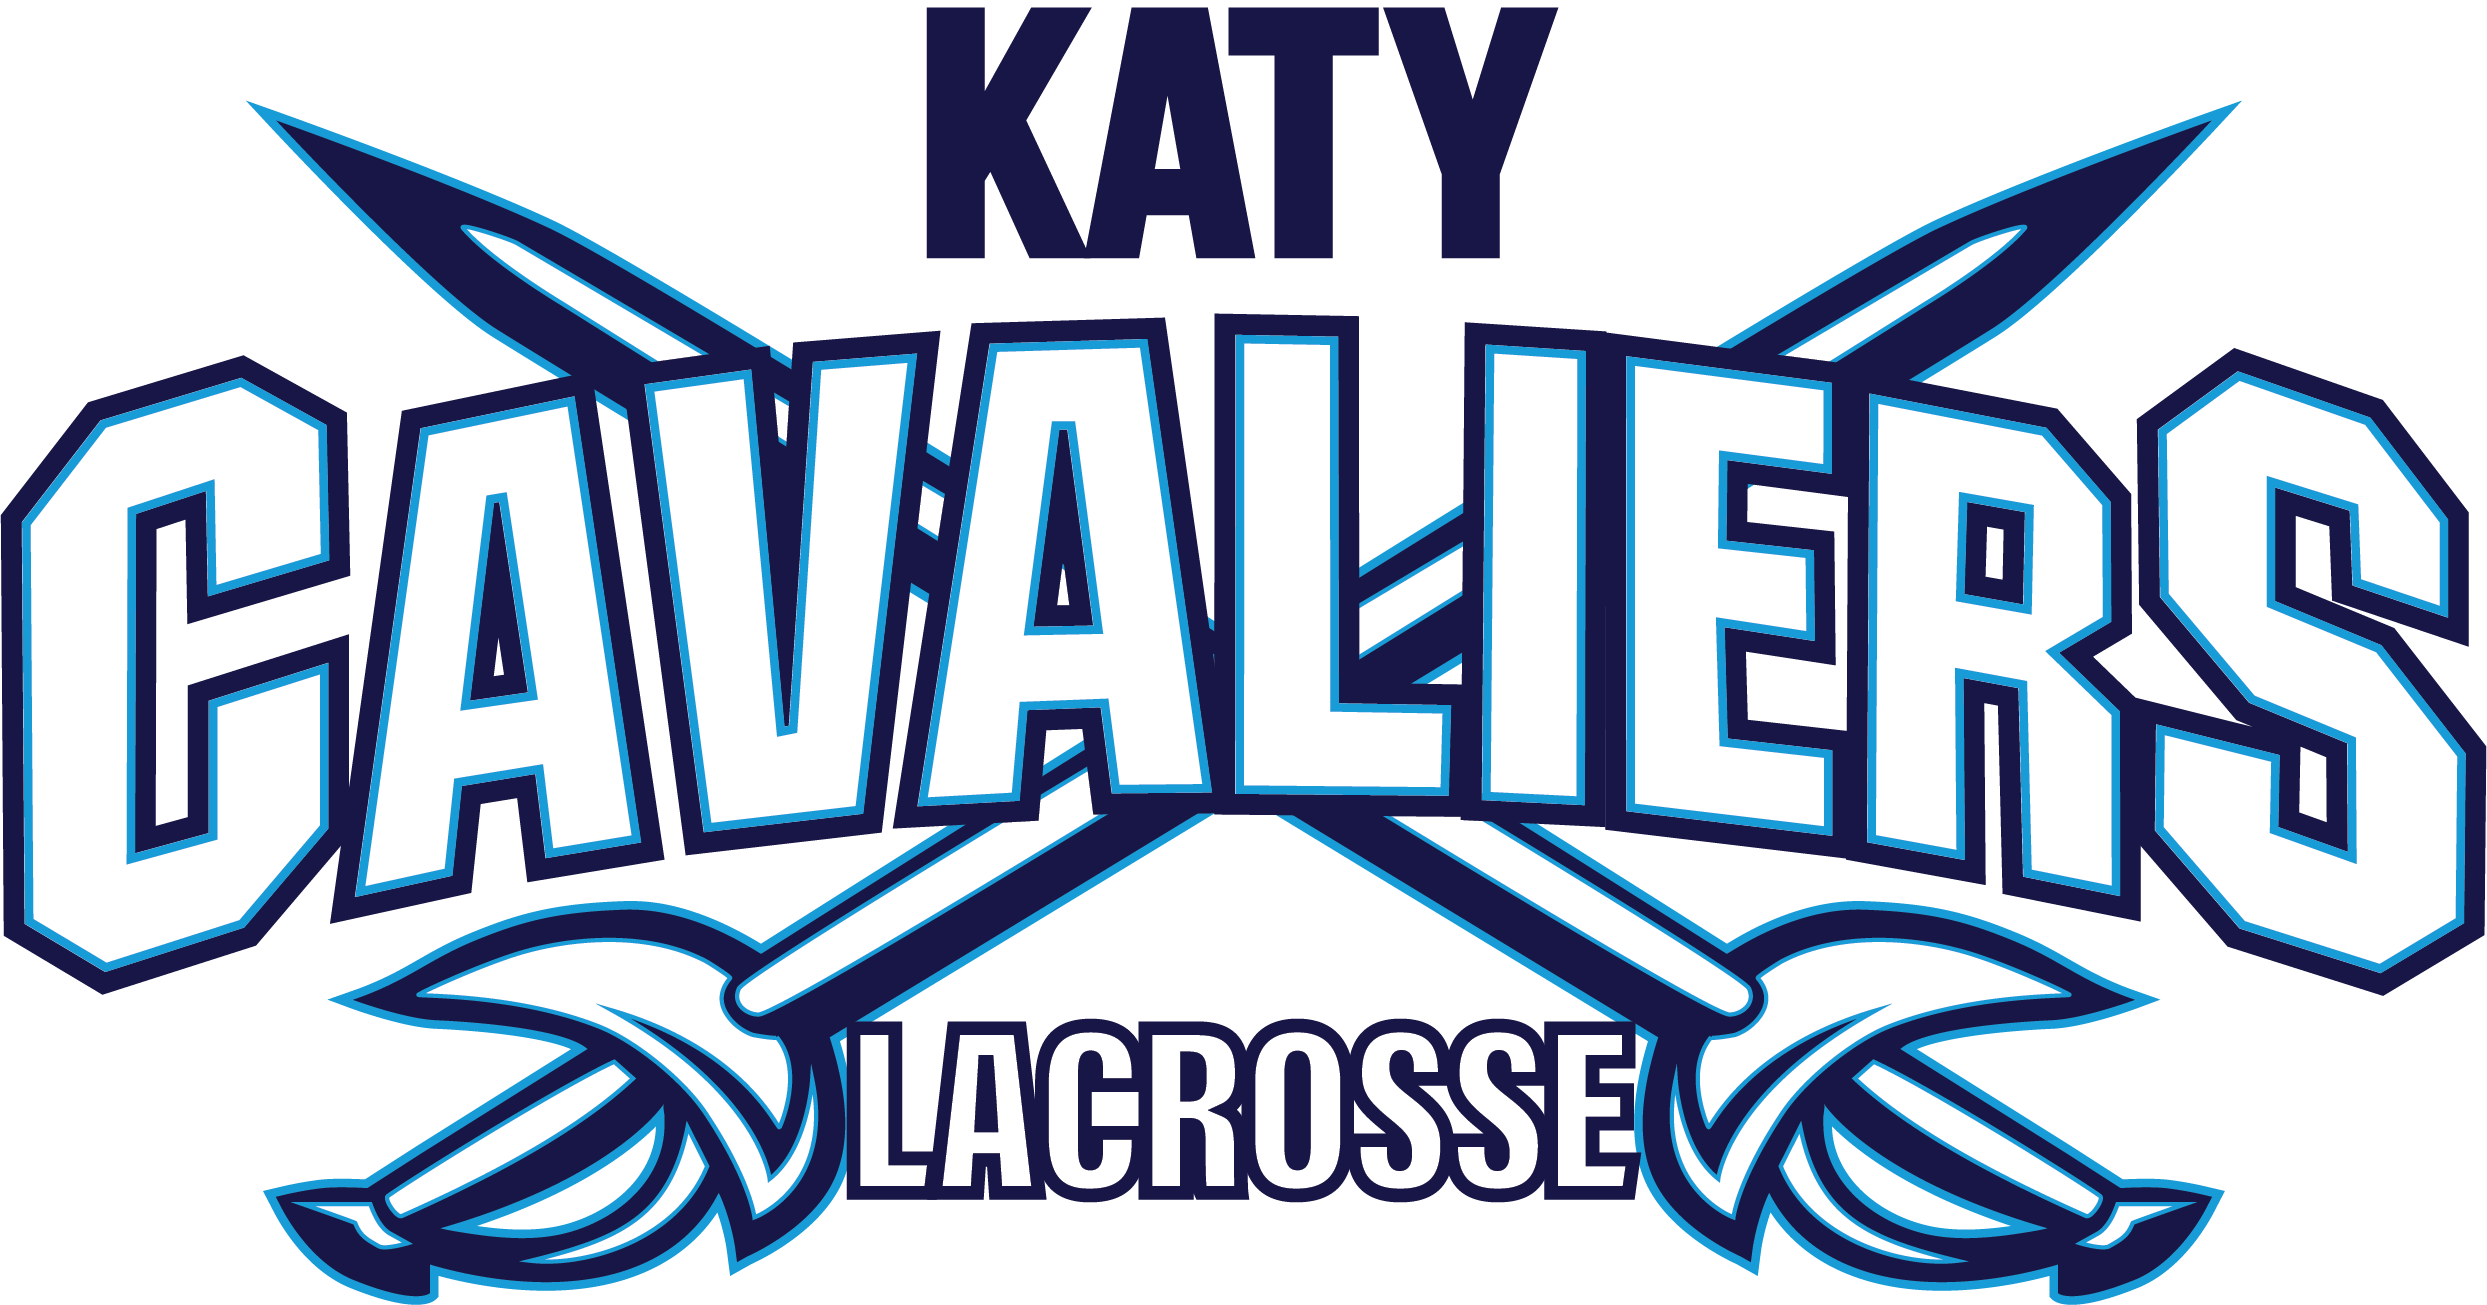 Katy Cavaliers Lacrosse